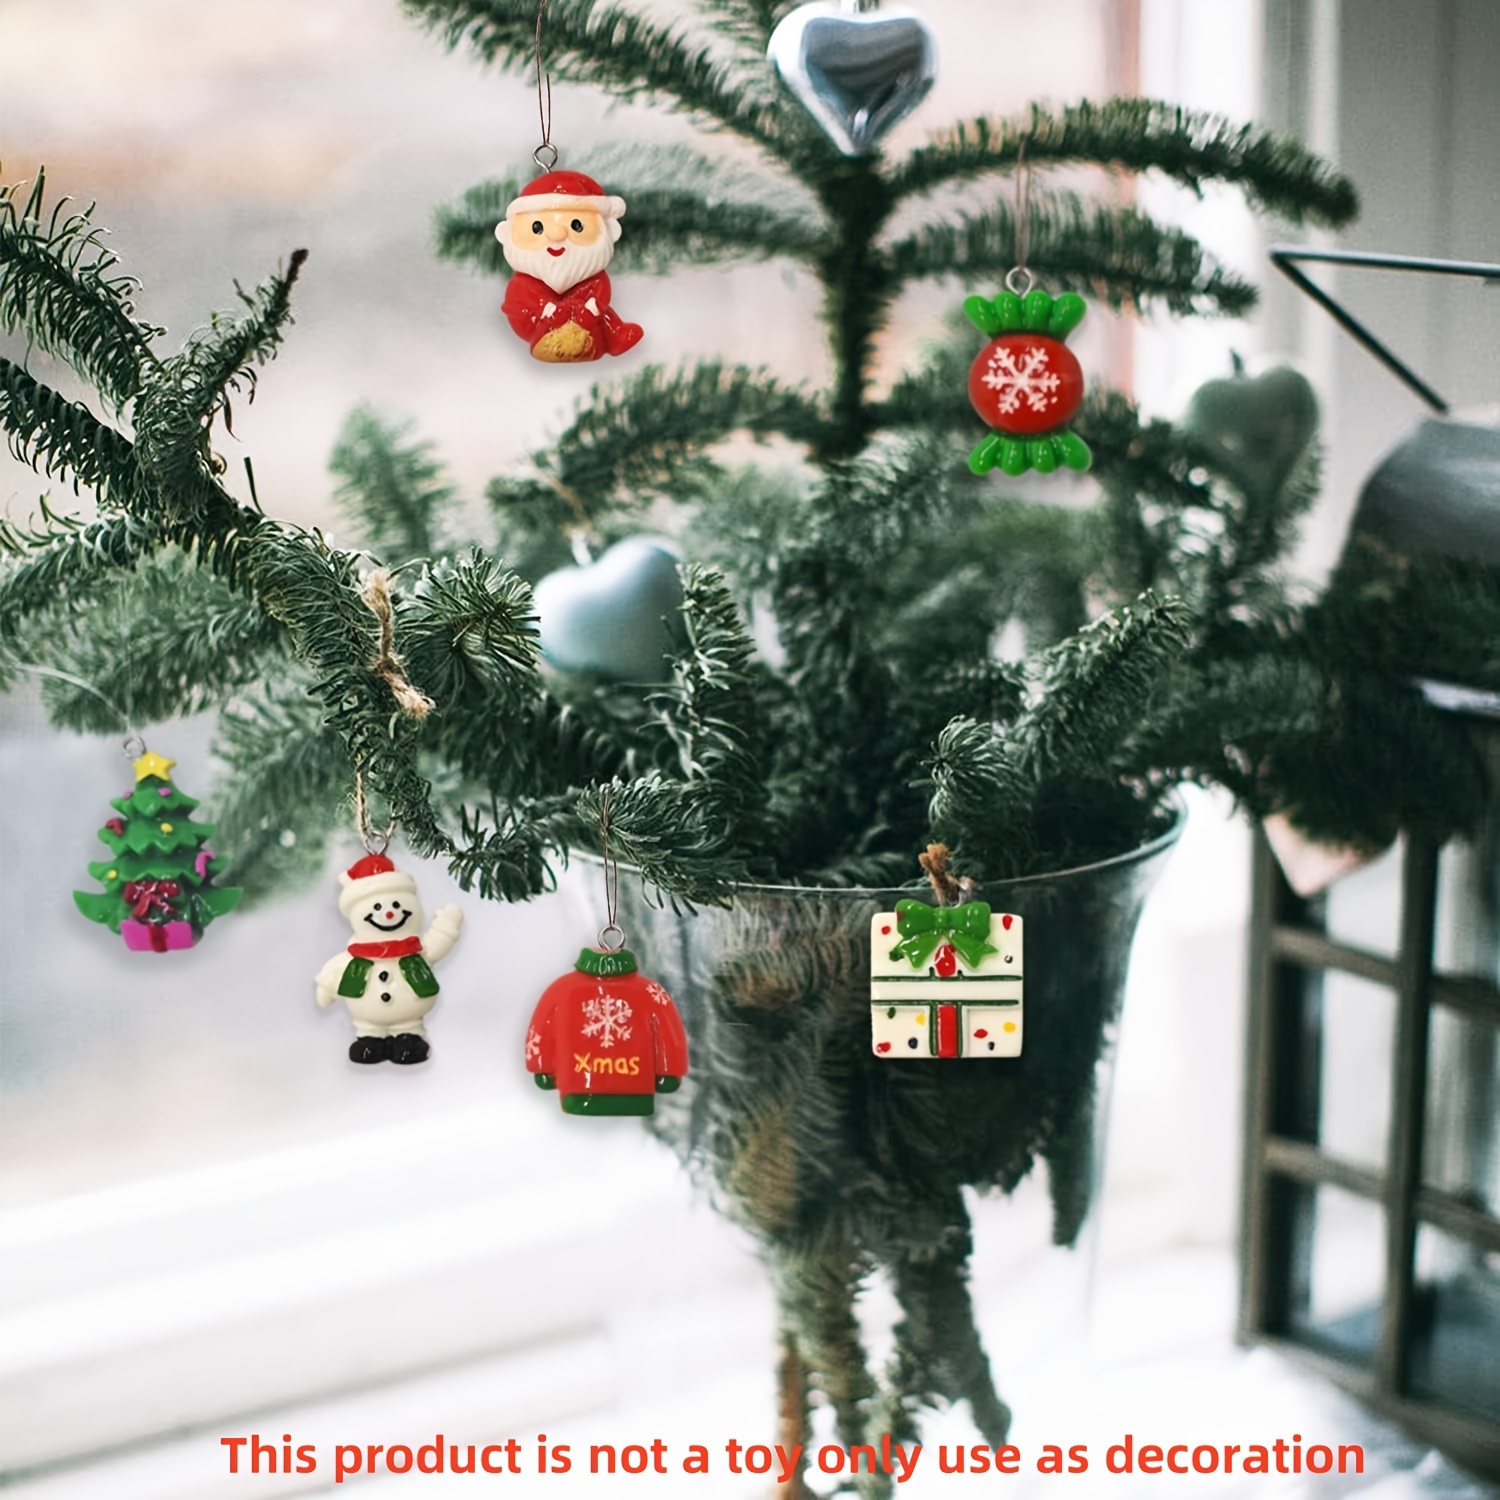 Christmas Miniature Trees, Christmas Craft Supplies